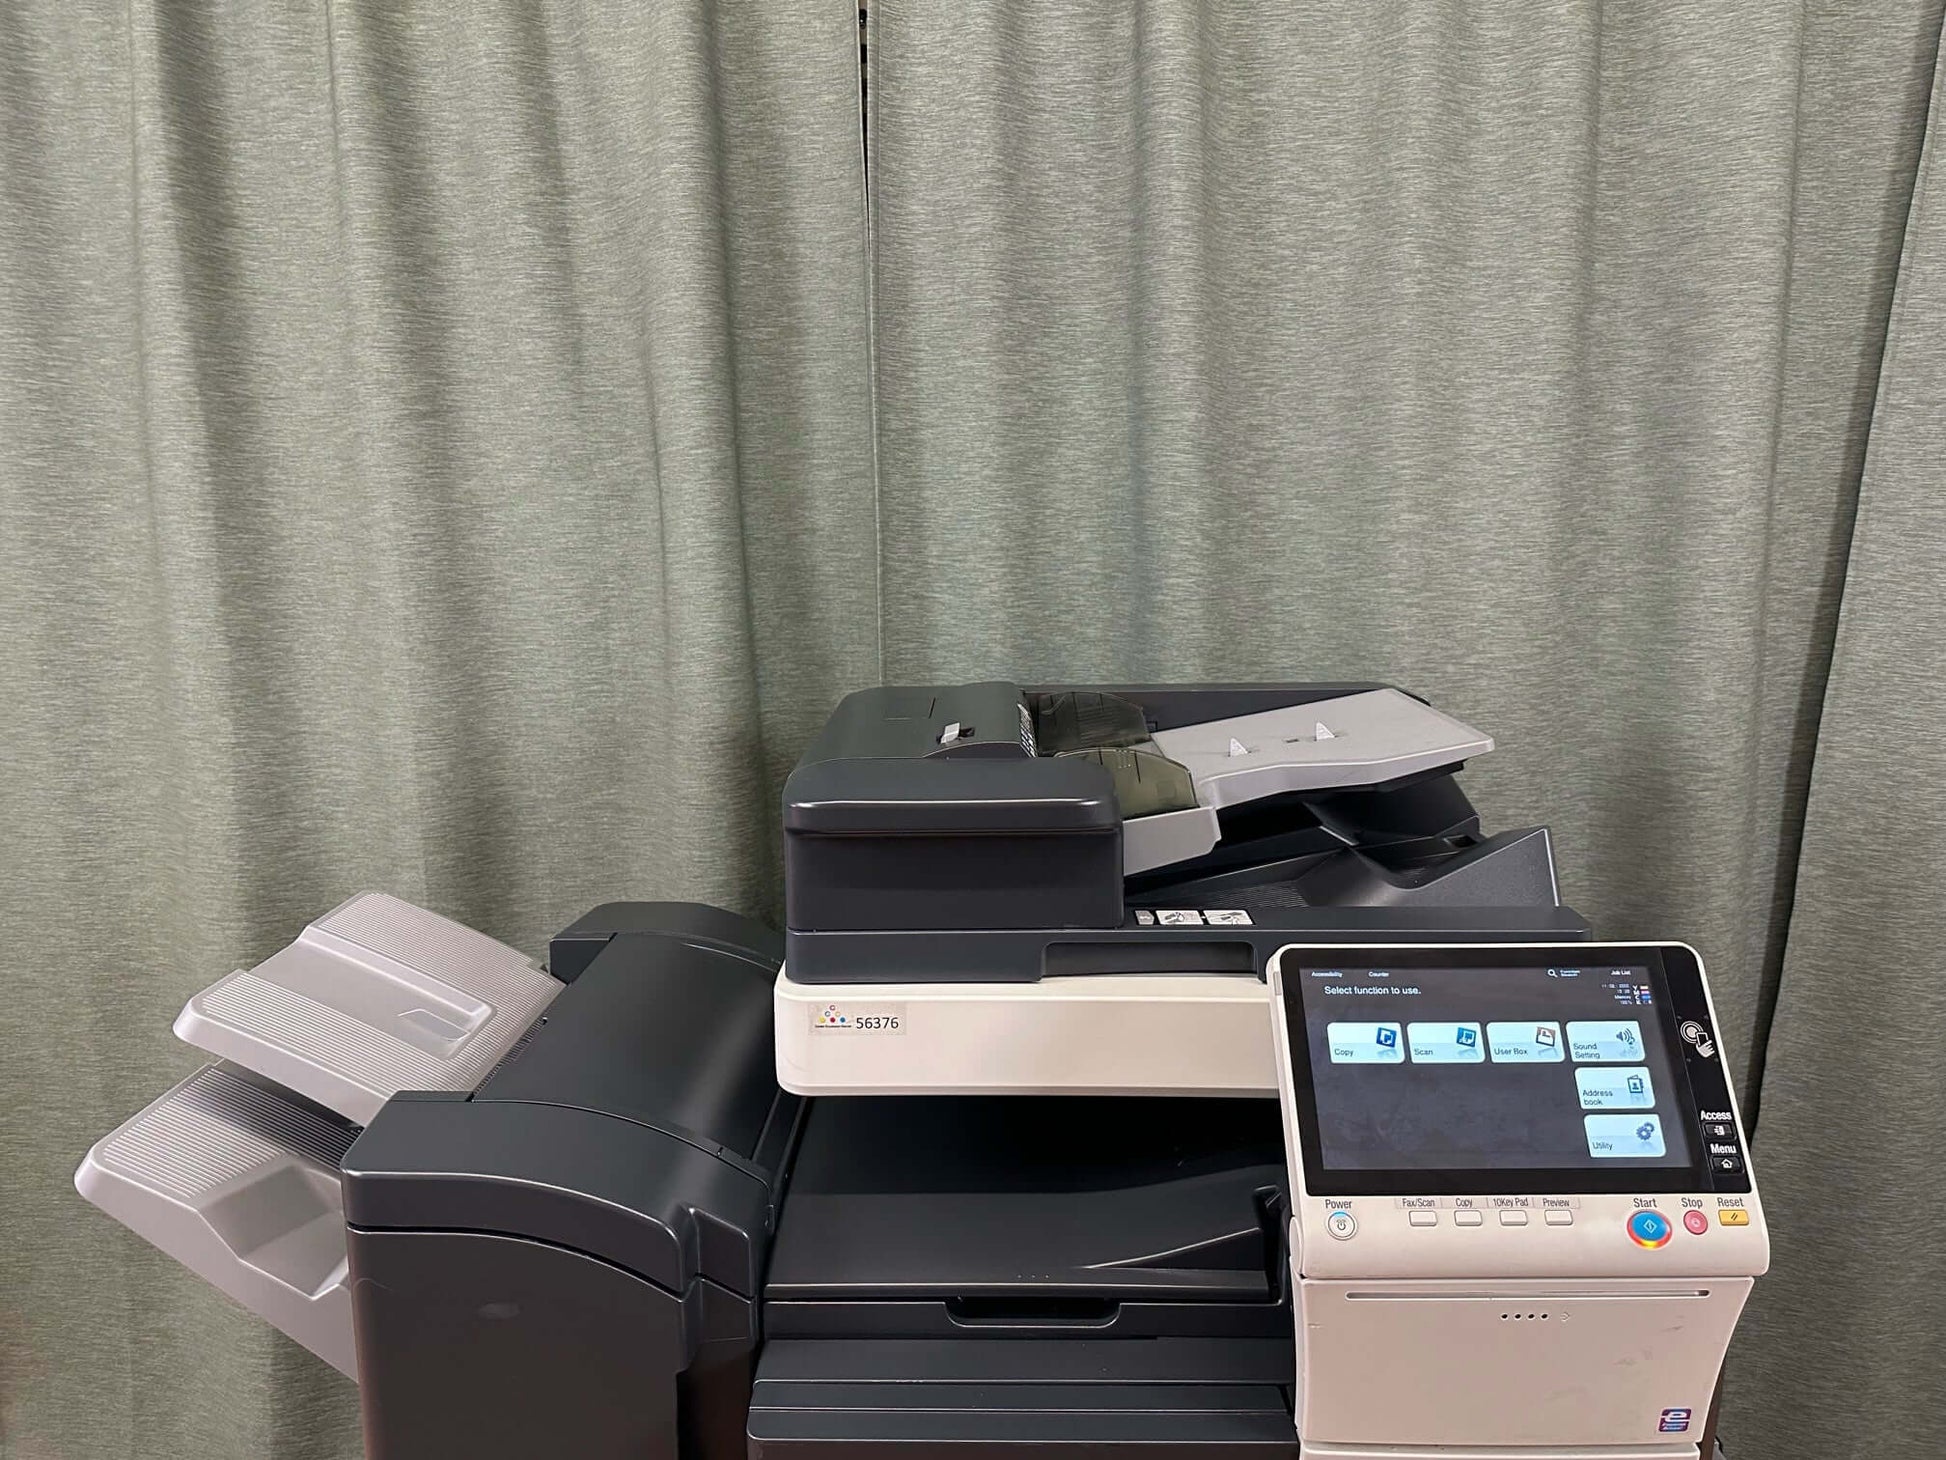 Konica Minolta Bizhub C659 Copier Printer Scanner Fax Booklet Finisher Low Use 75K - copier-clearance-center